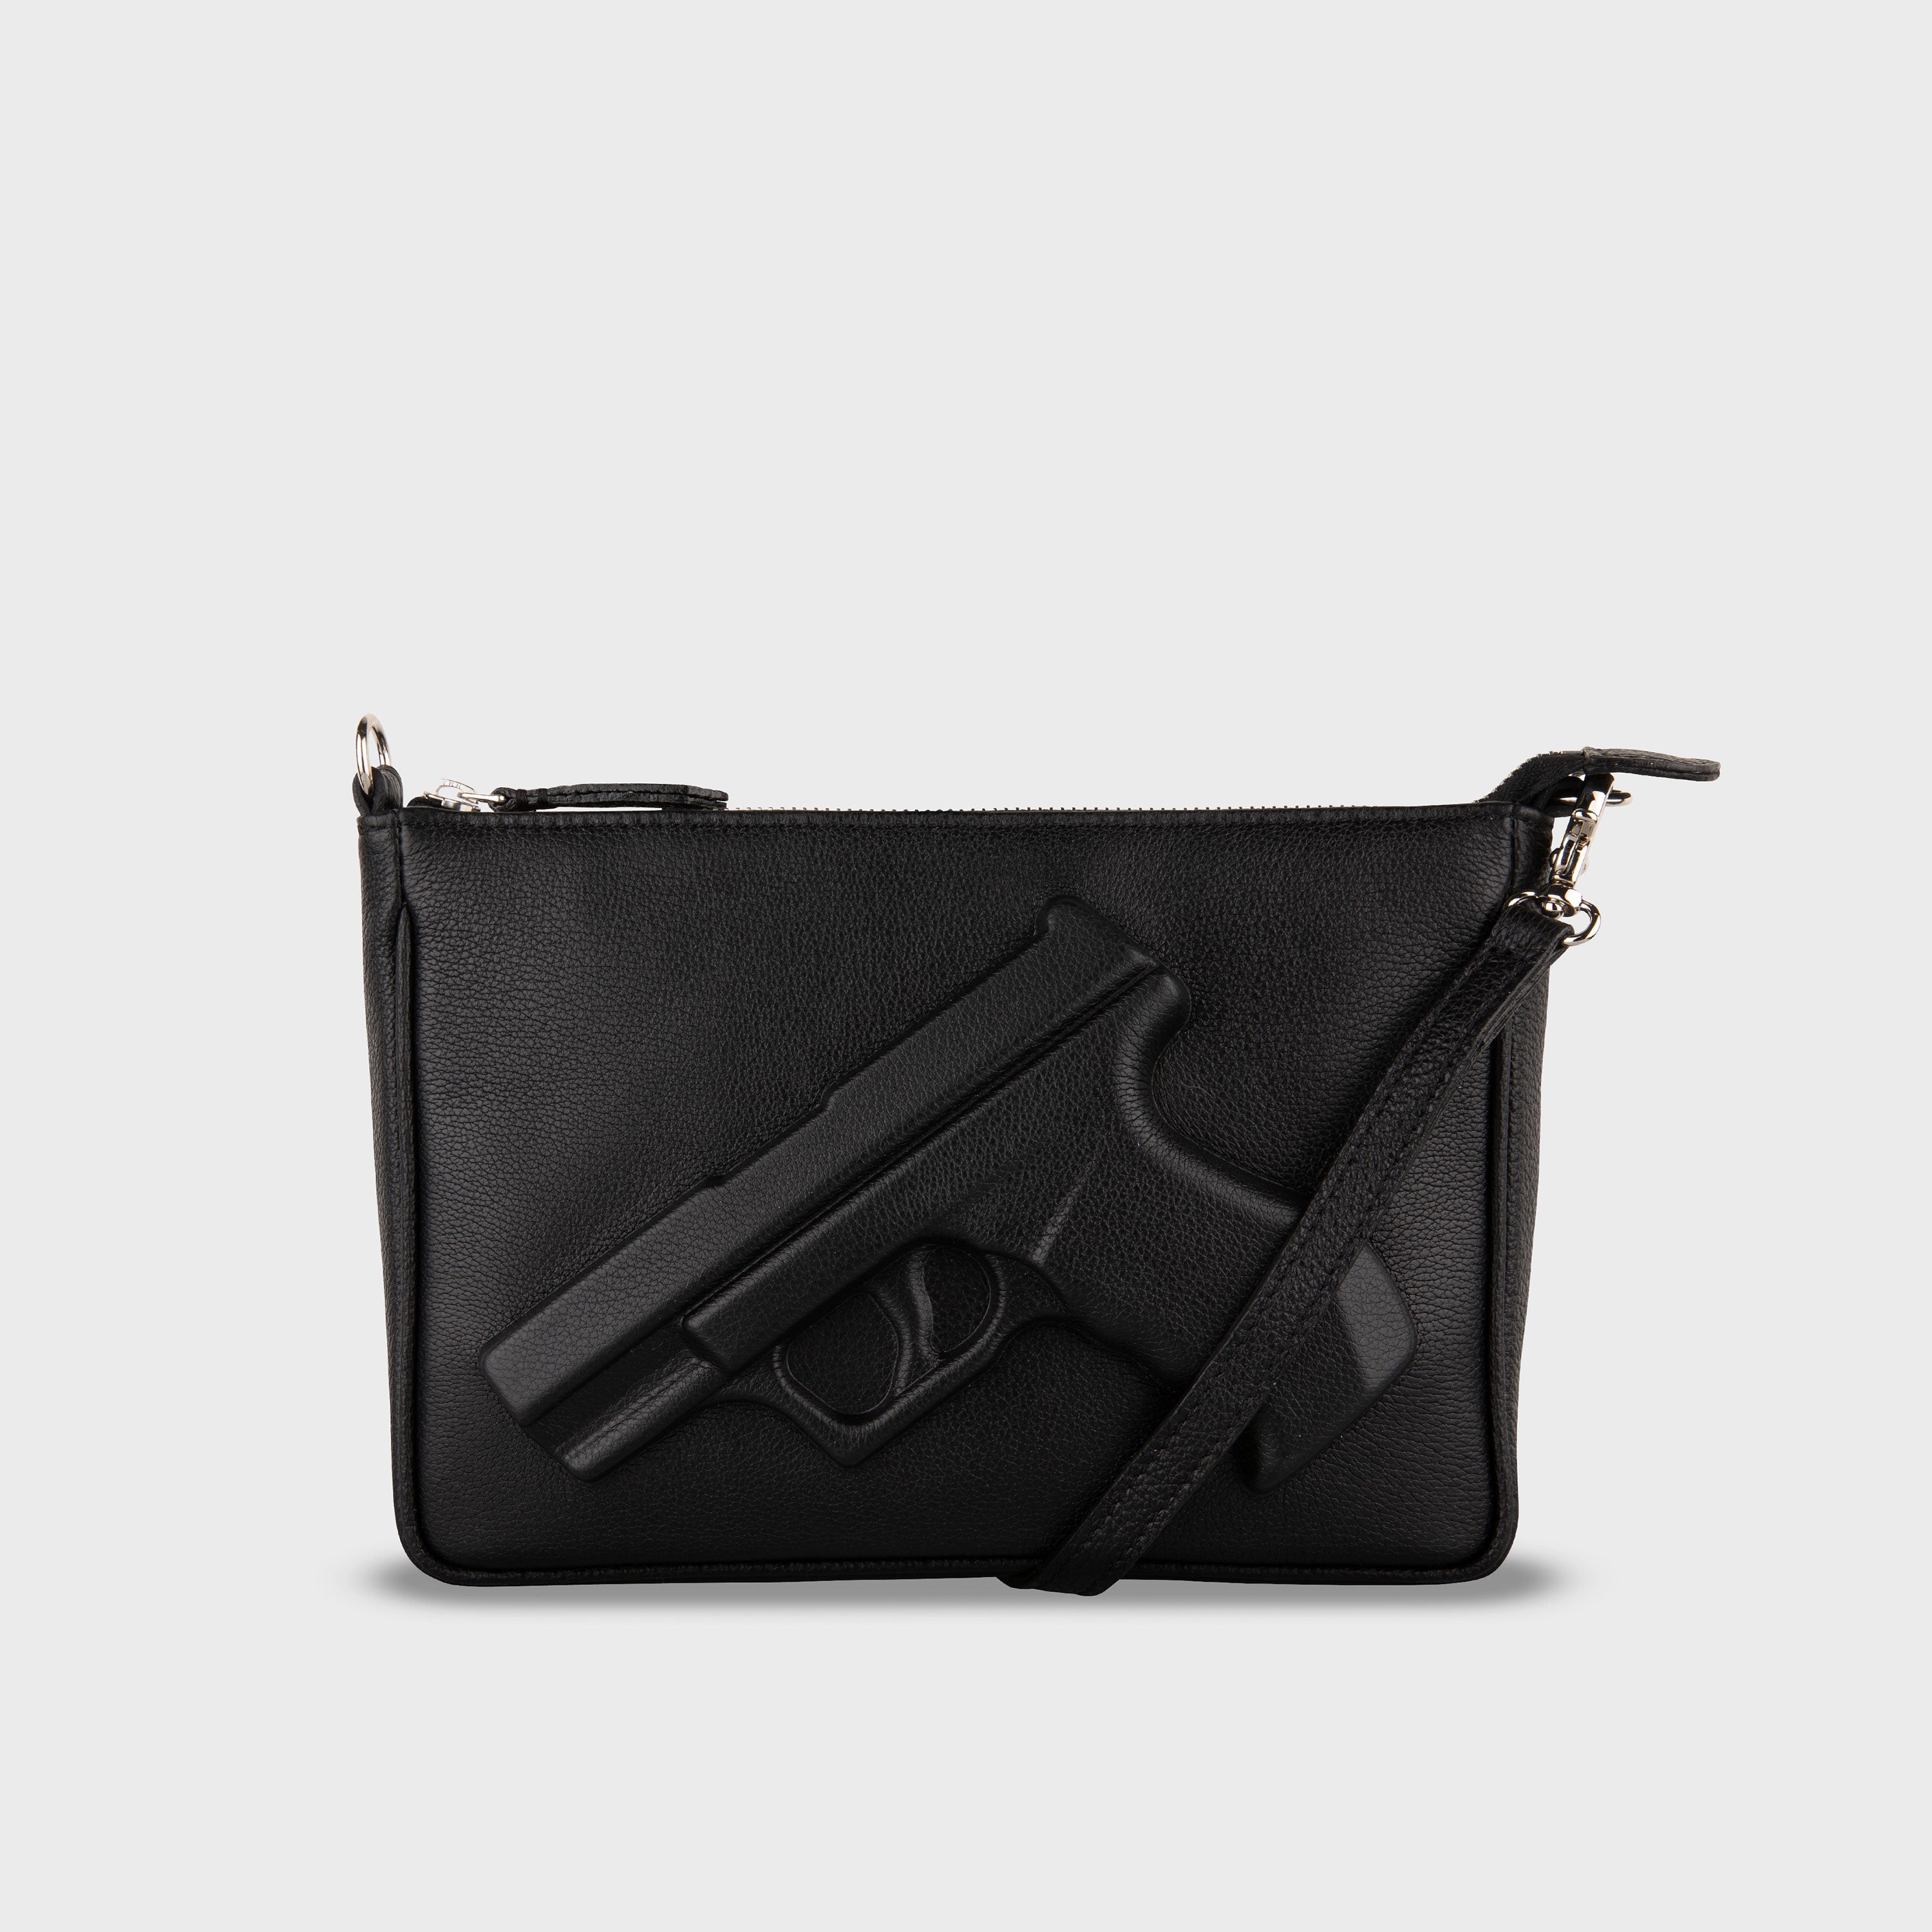 Vlieger & Vandam - Purse Gun Black, embossed leather gun bag